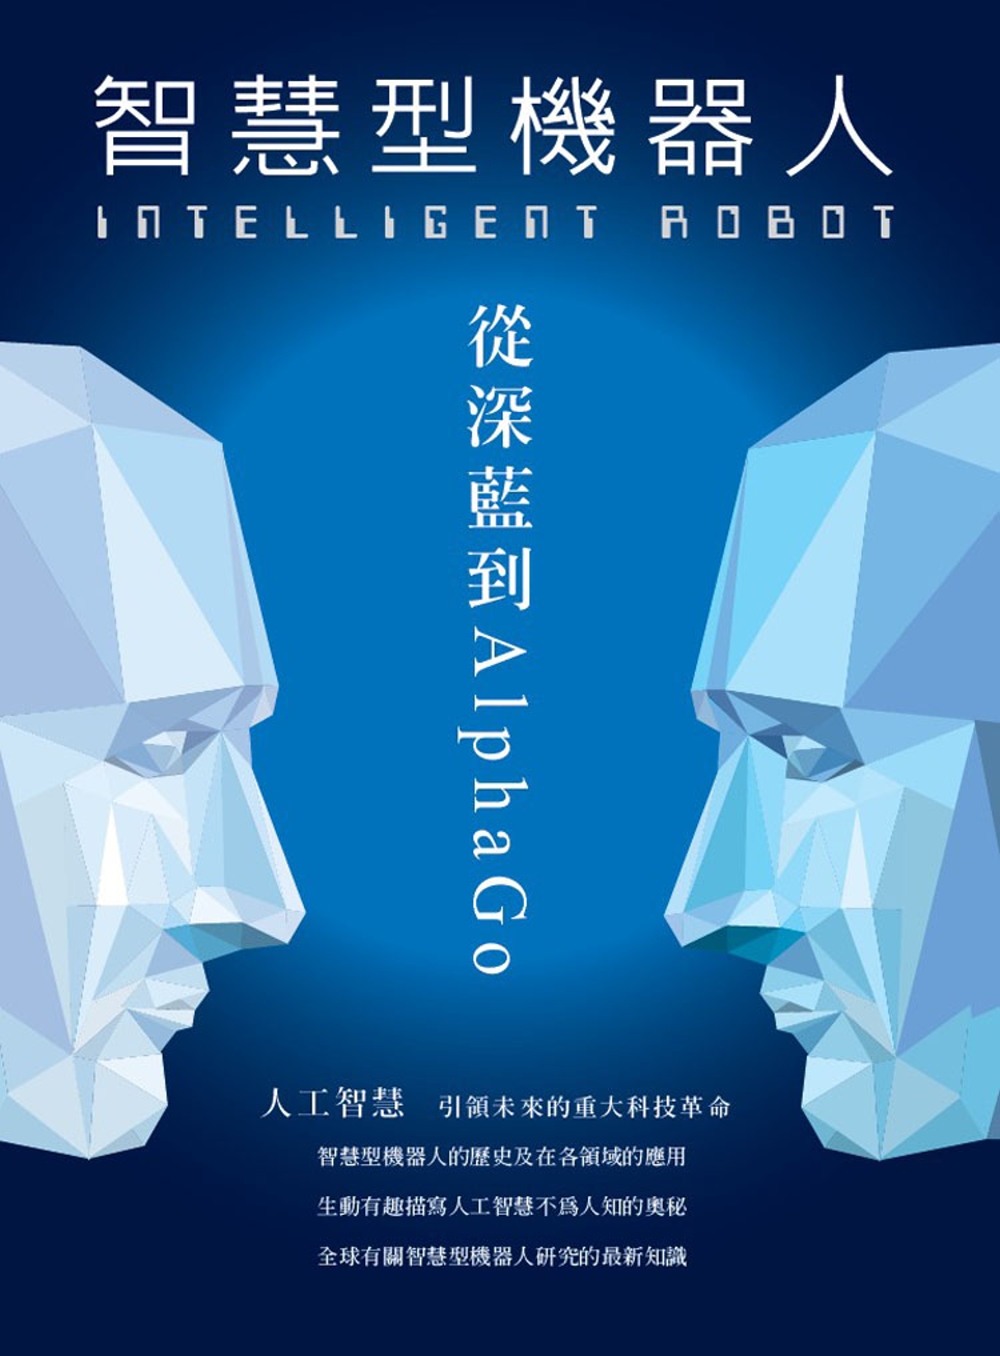 INTELLIGENT ROBOT 智慧型機器人 從深藍到AlphaGo